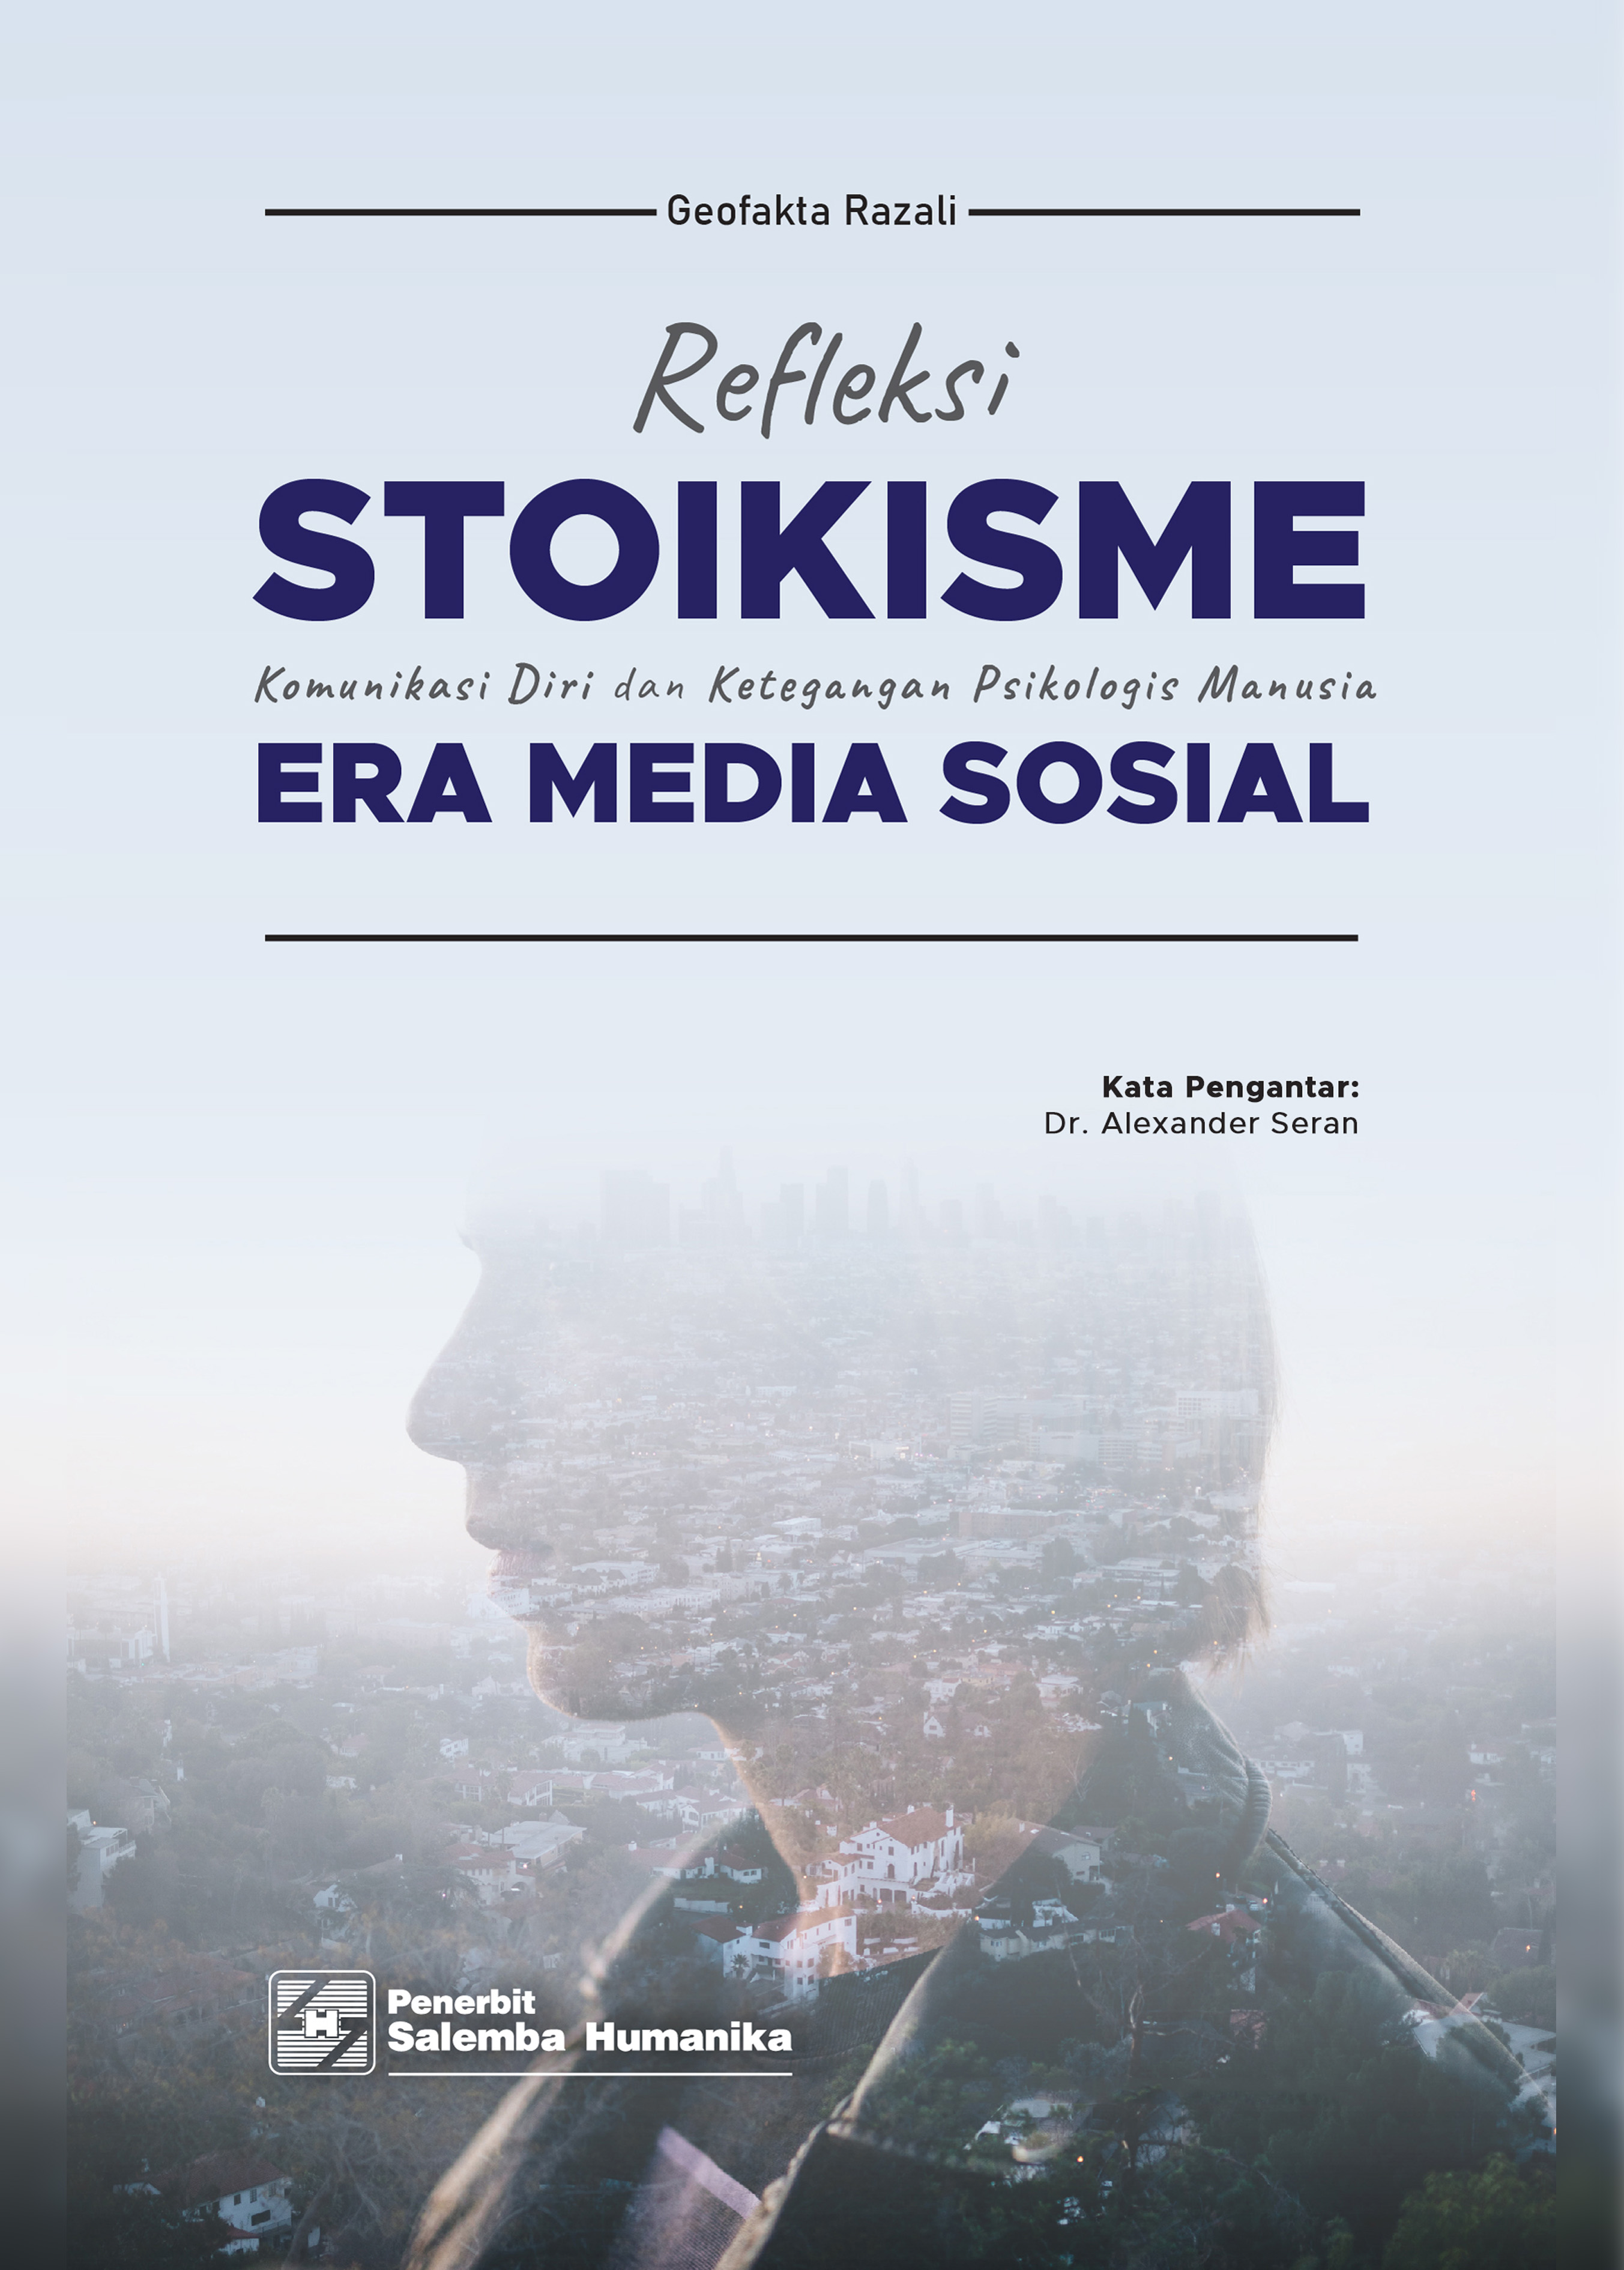 eBook Refleksi Stoikisme Komunikasi Diri dan Ketegangan Psikologis Manusia Era Media Sosial (Geofakta Razali)